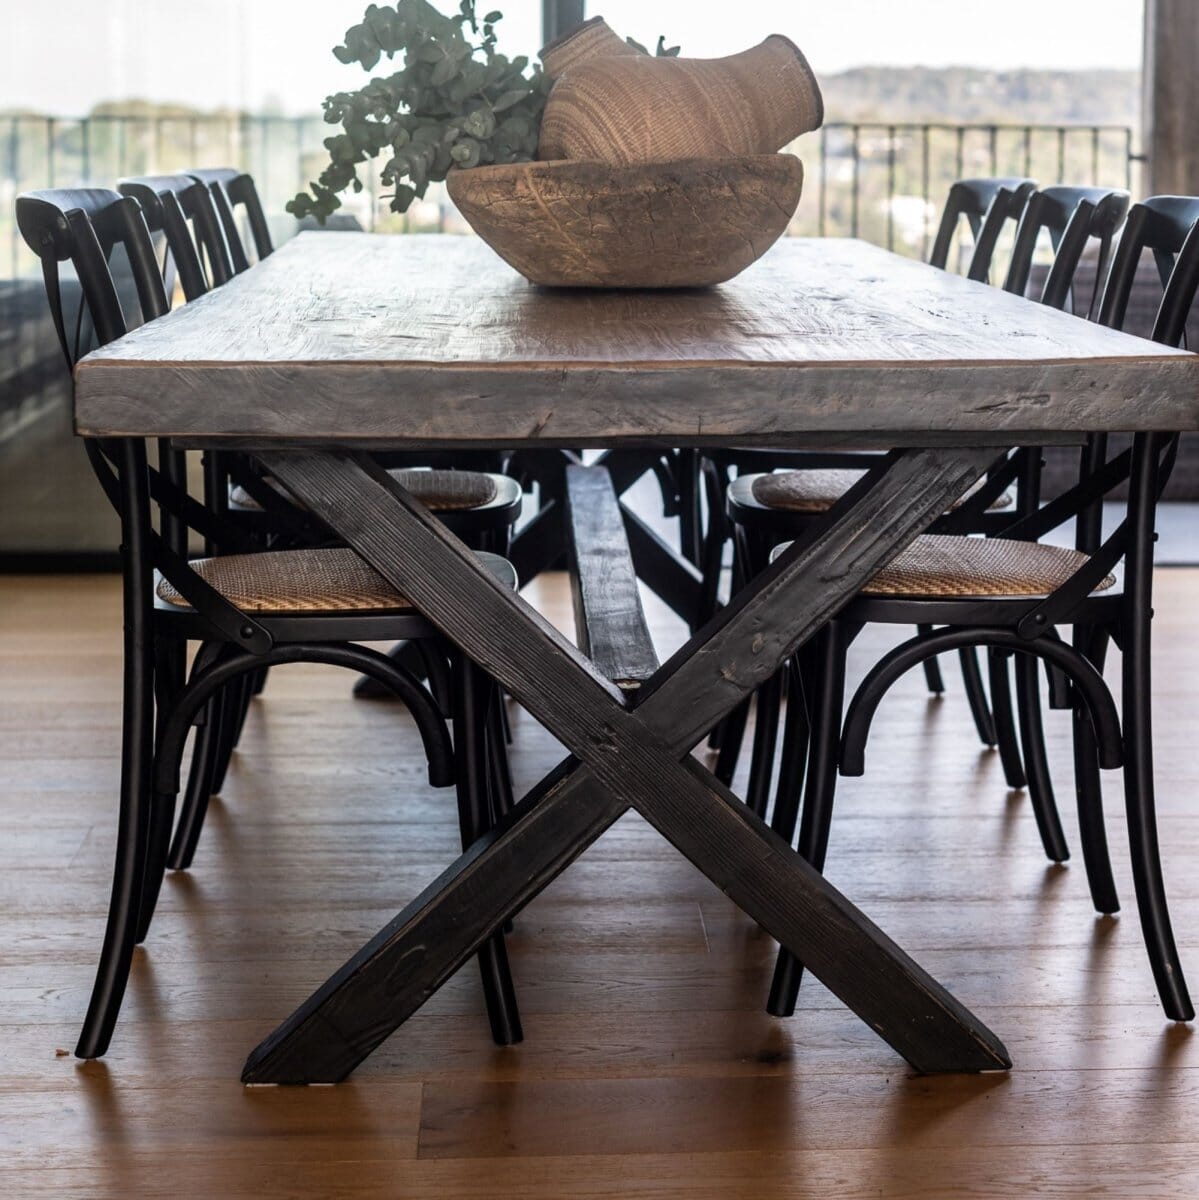 Beachwood Designs-The Custom Cross Base Dining Table